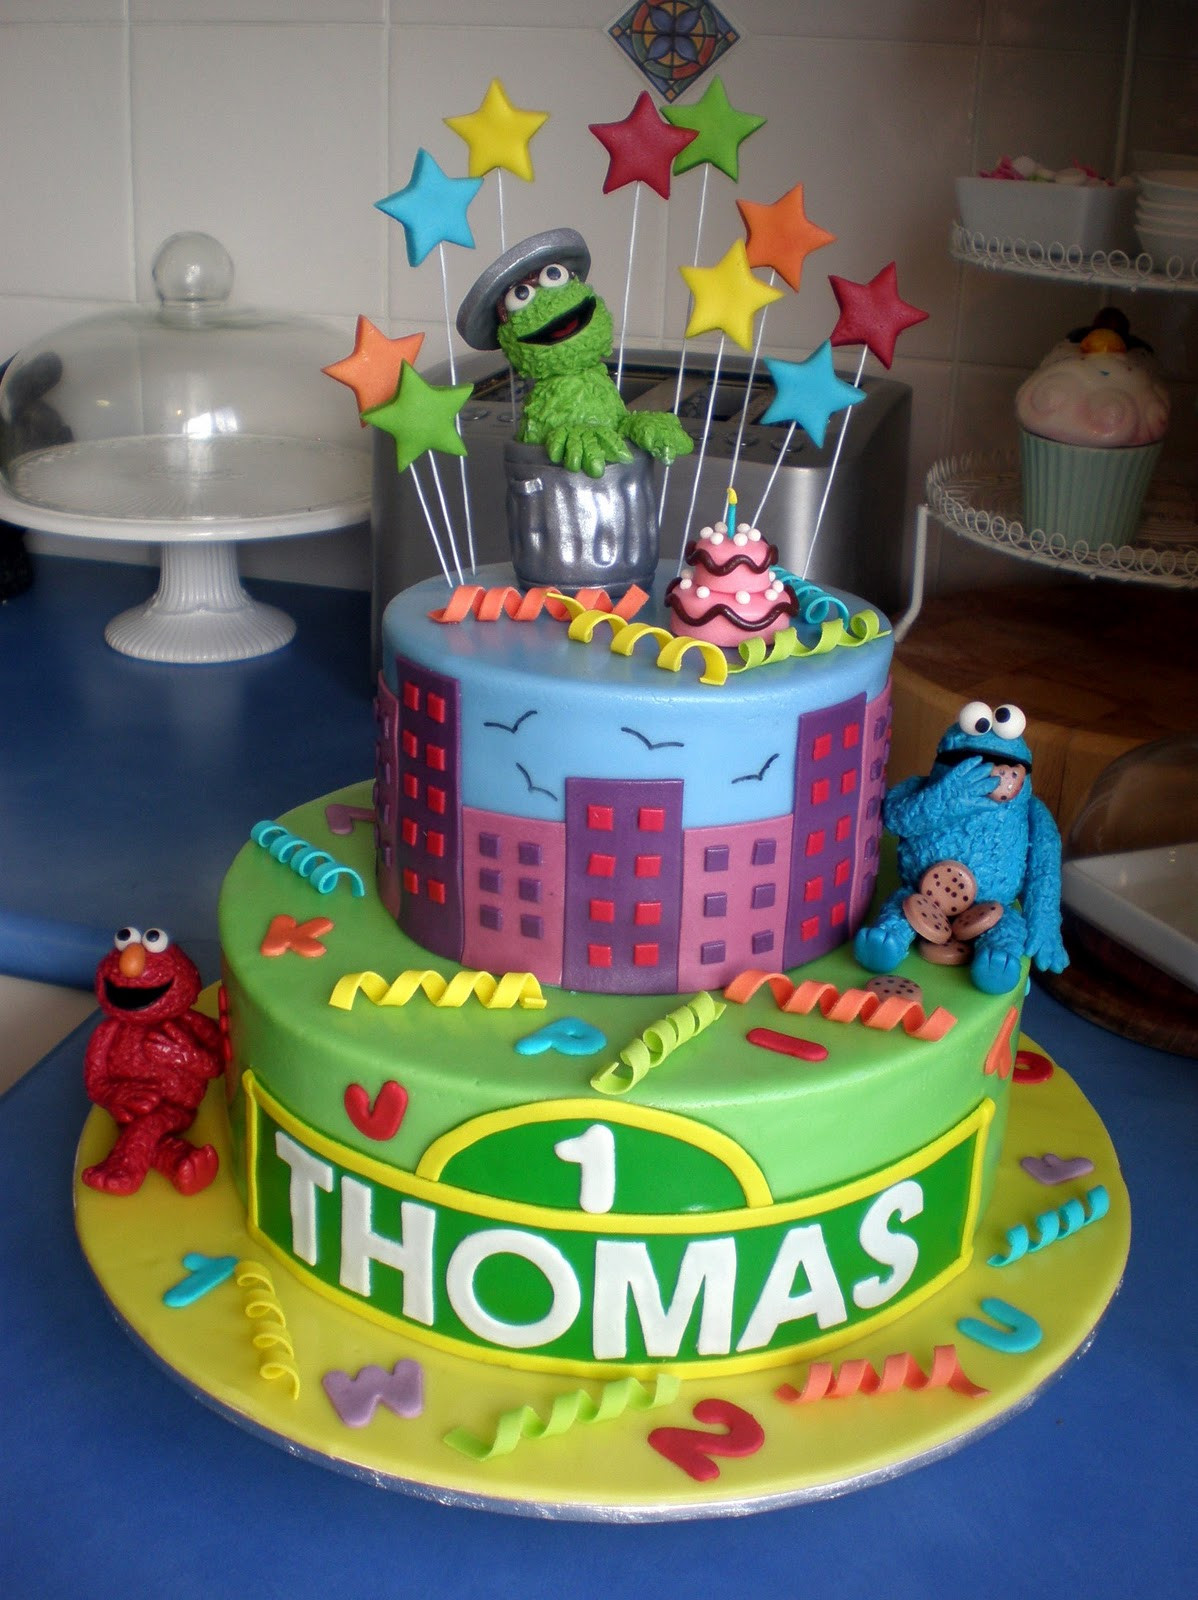 Best ideas about Sesame Street Birthday Cake
. Save or Pin Sugar Siren Cakes Mackay Sesame Street Birthday Cake Now.